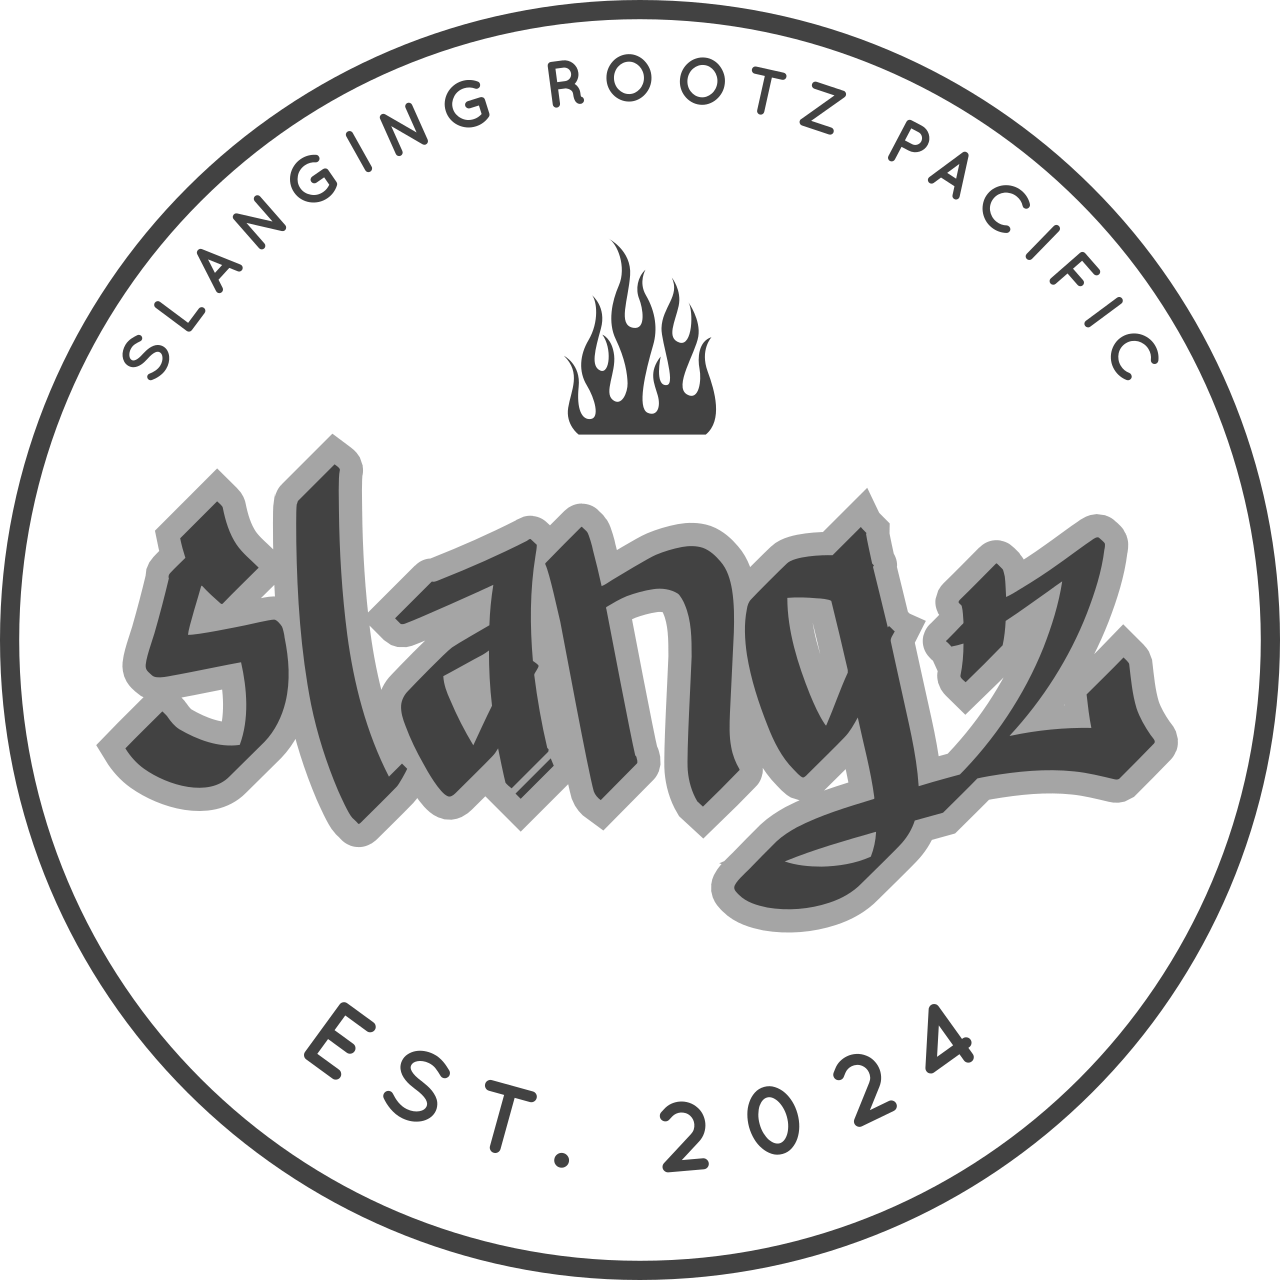 slangz's logo